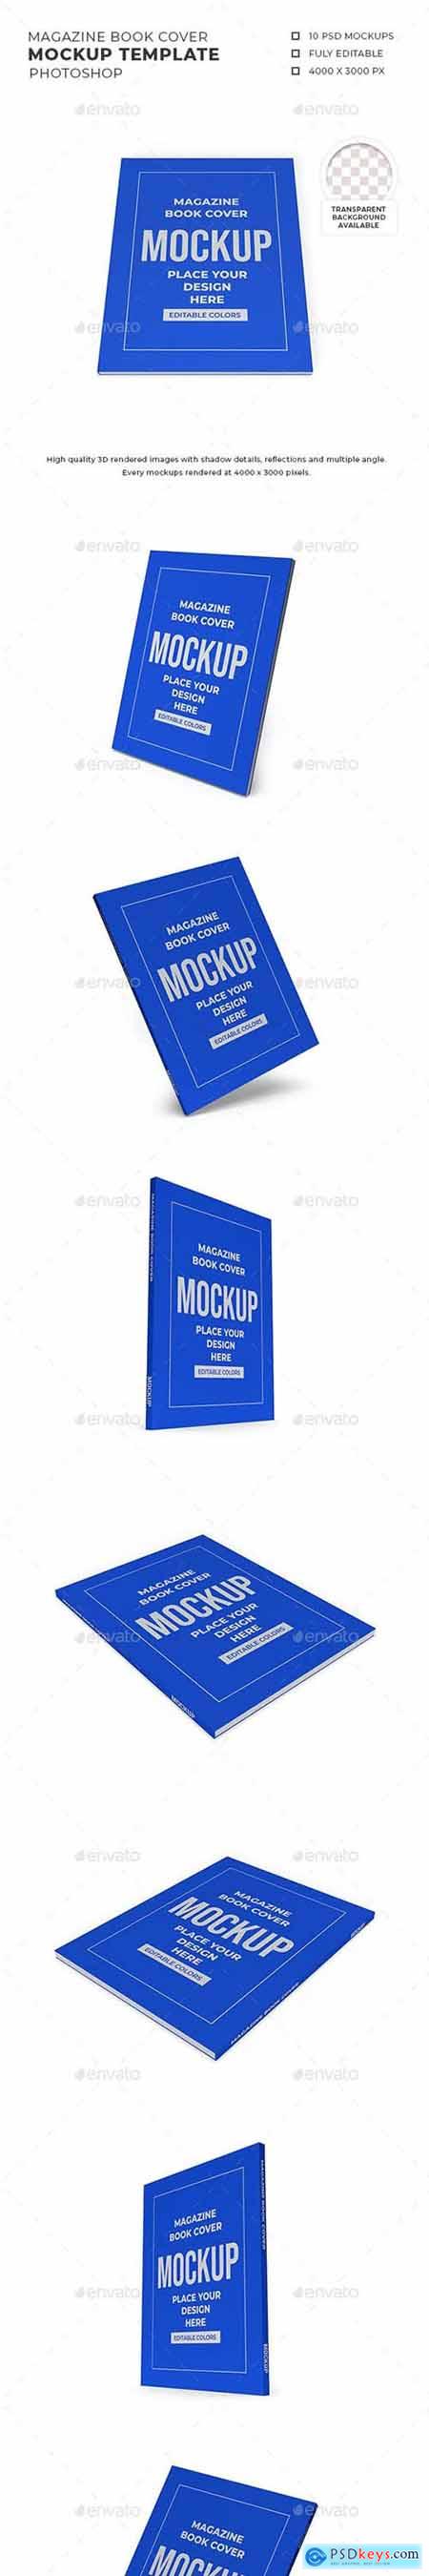 Magazine Book Cover Mockup Template Set 36610777